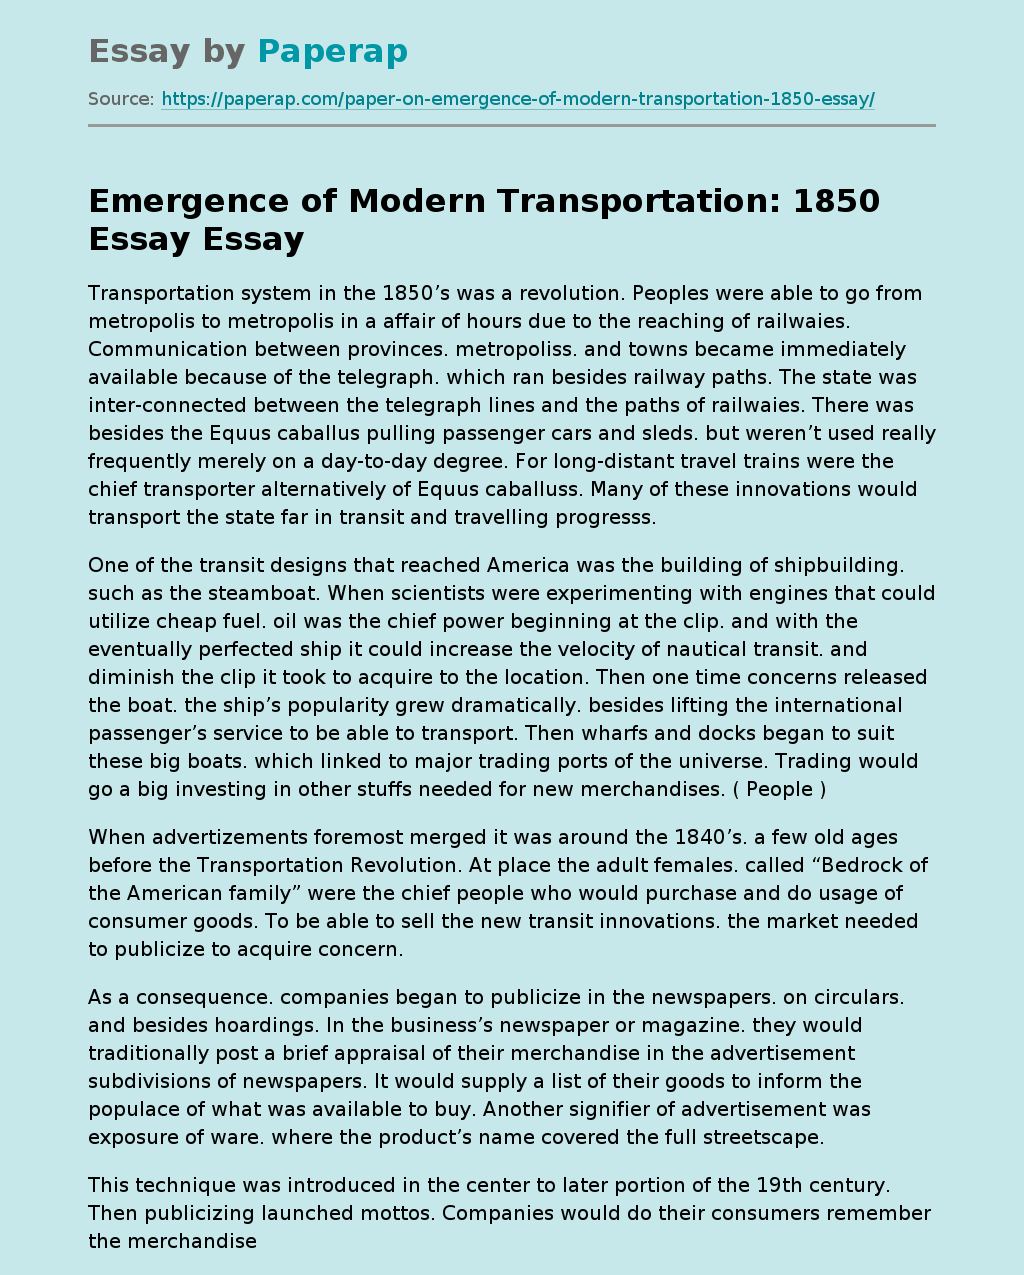 Emergence of Modern Transportation: 1850 Essay